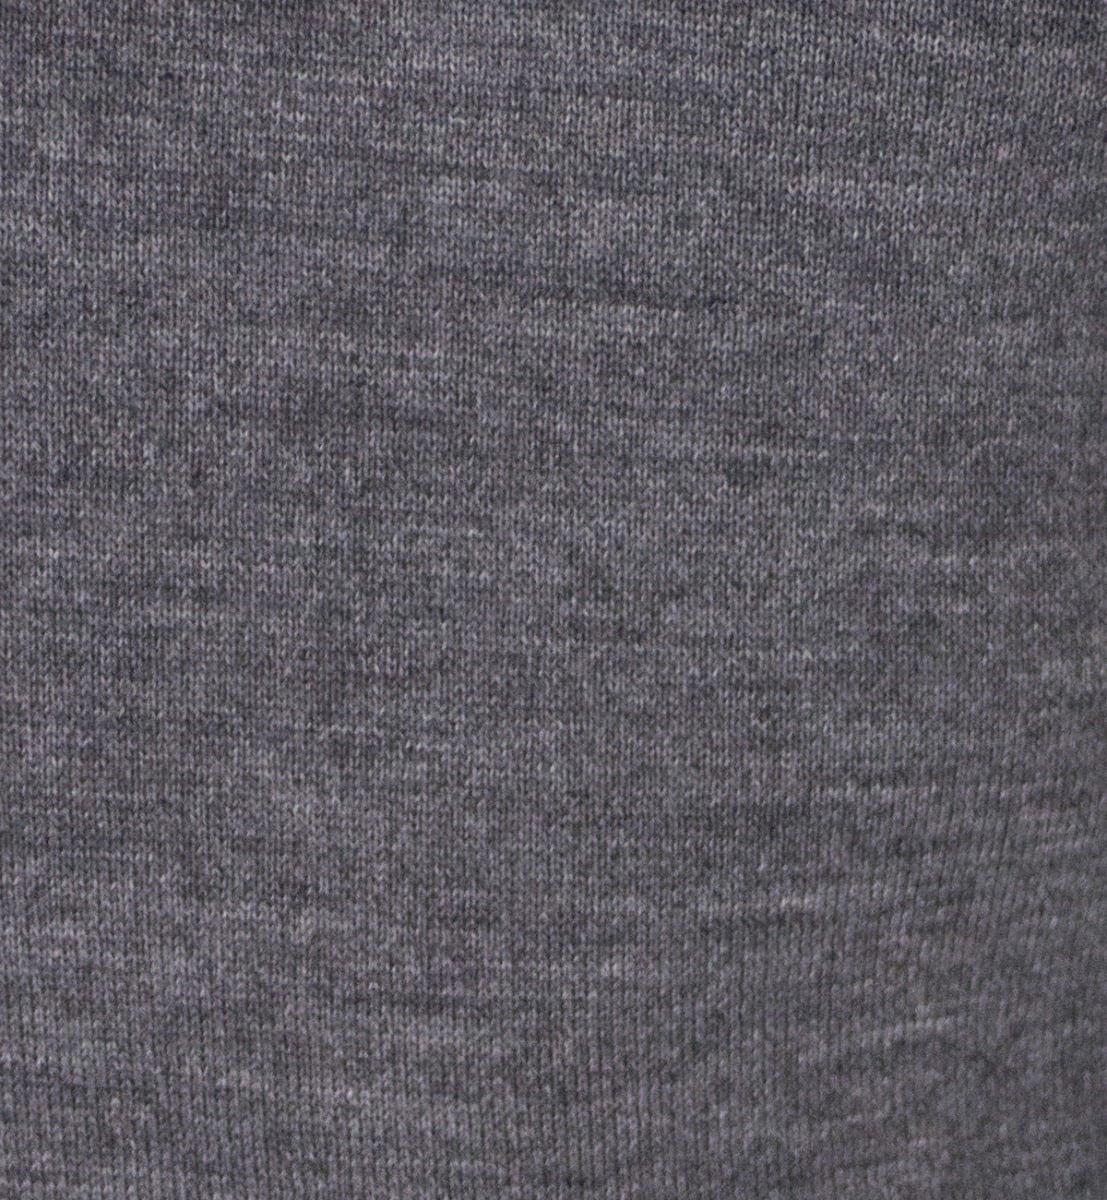 Dolcevita uomo grigio scuro in lana merinos slim fit made in italy casual